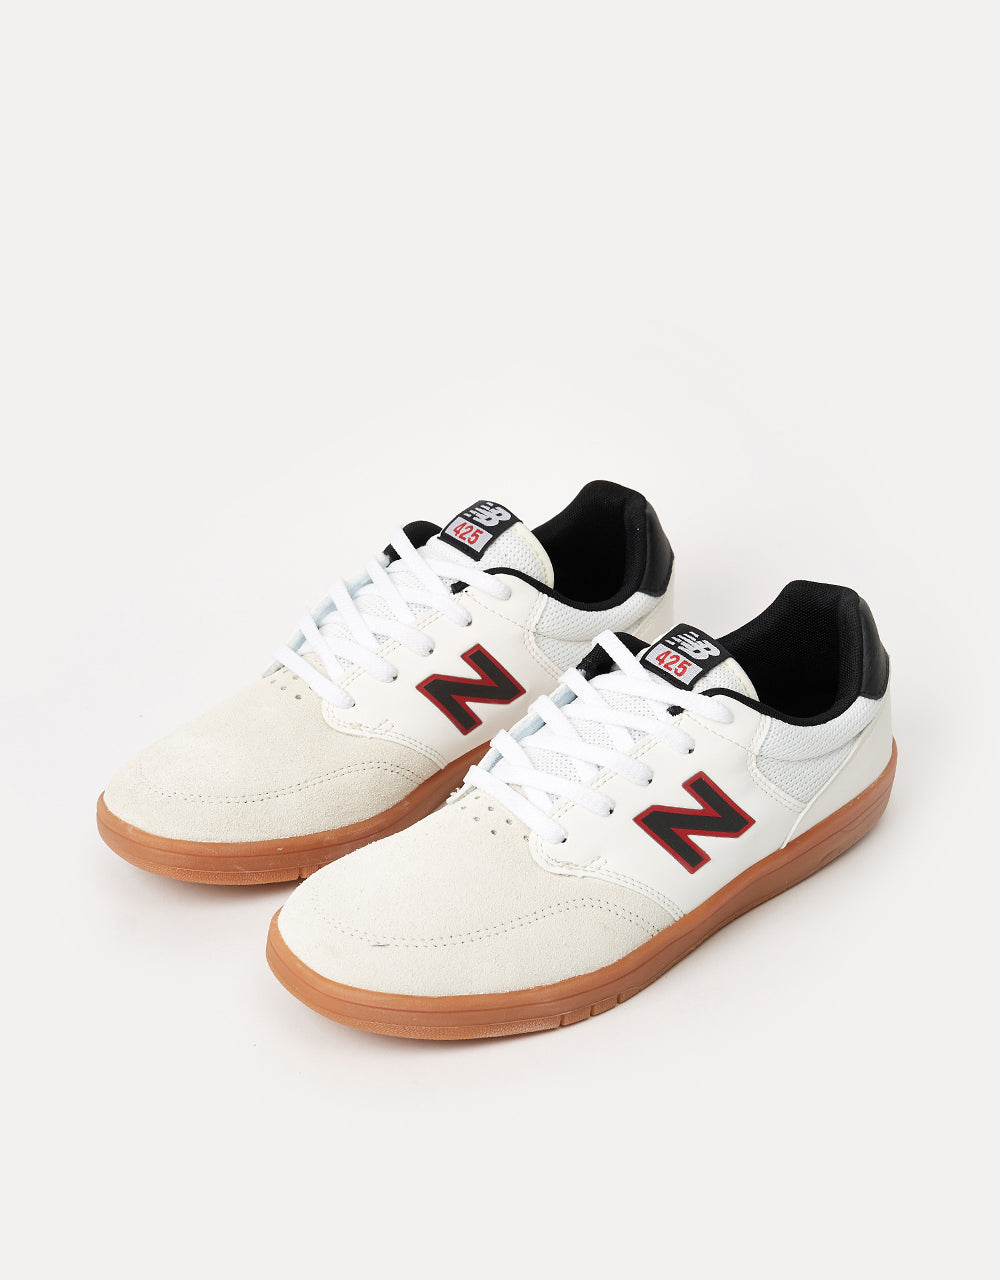 New Balance Numeric 425 Skate Shoes - White/Gum